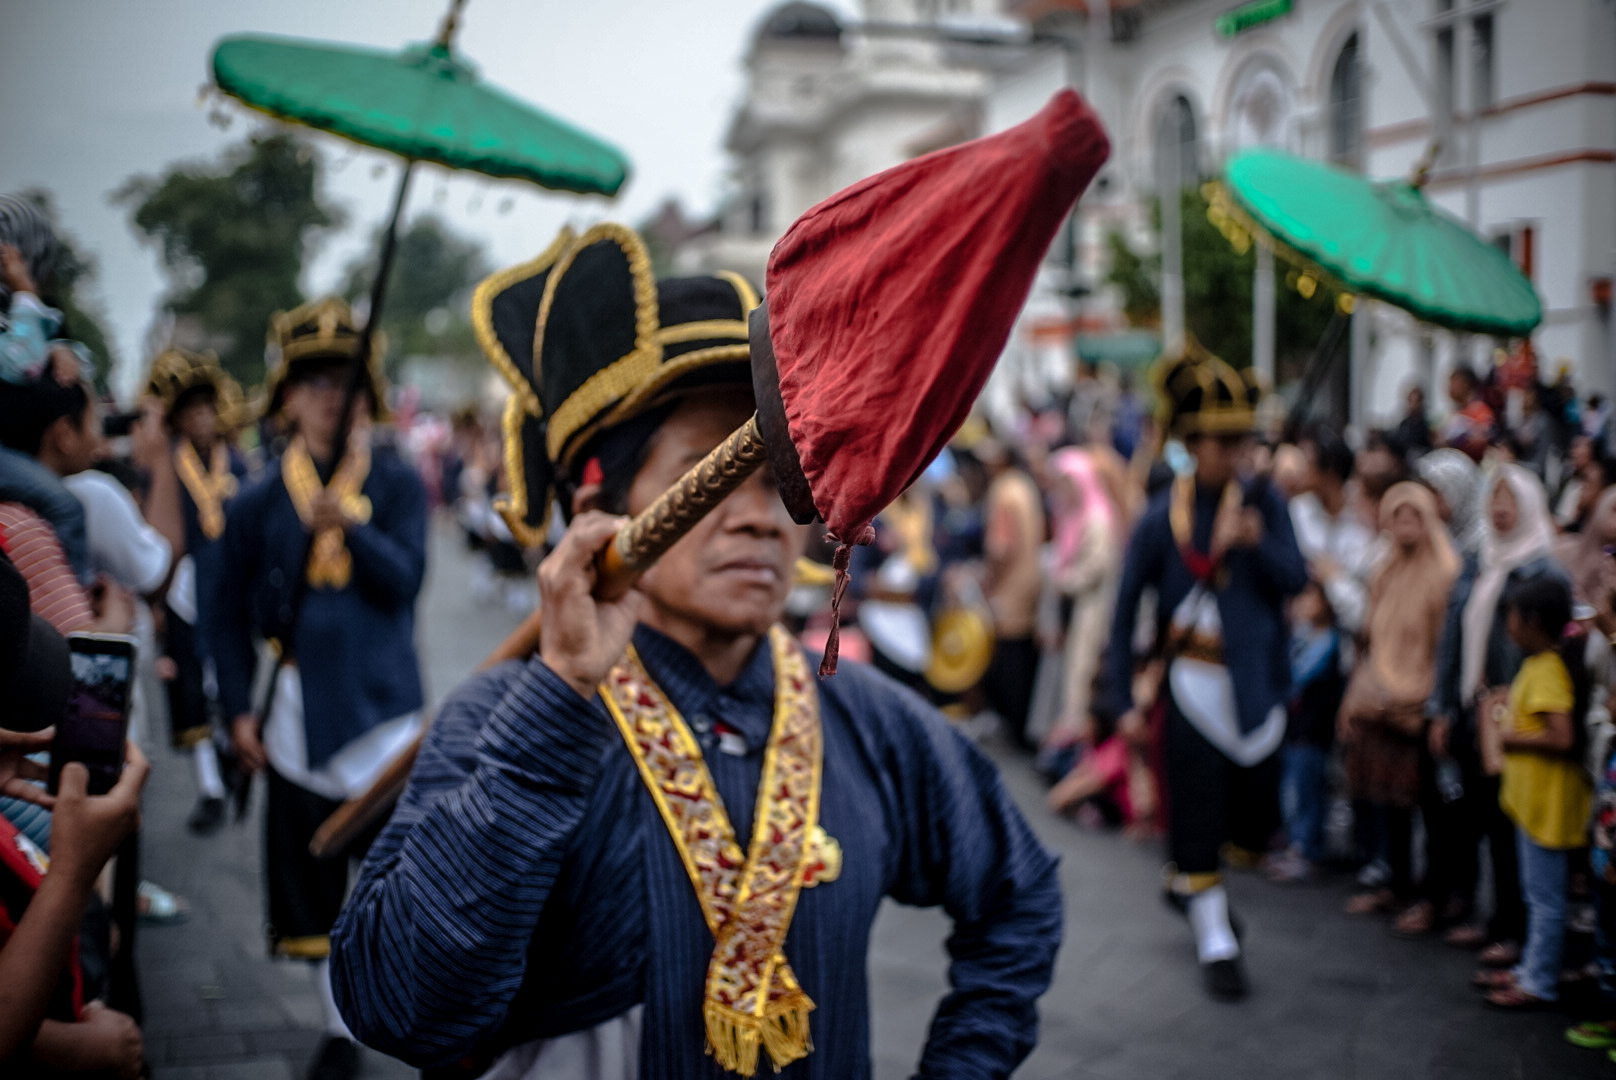 Festival Kebudayaan Yogyakarta 2019 Resmi Dibuka Lewat ‘Pawai Mulanira